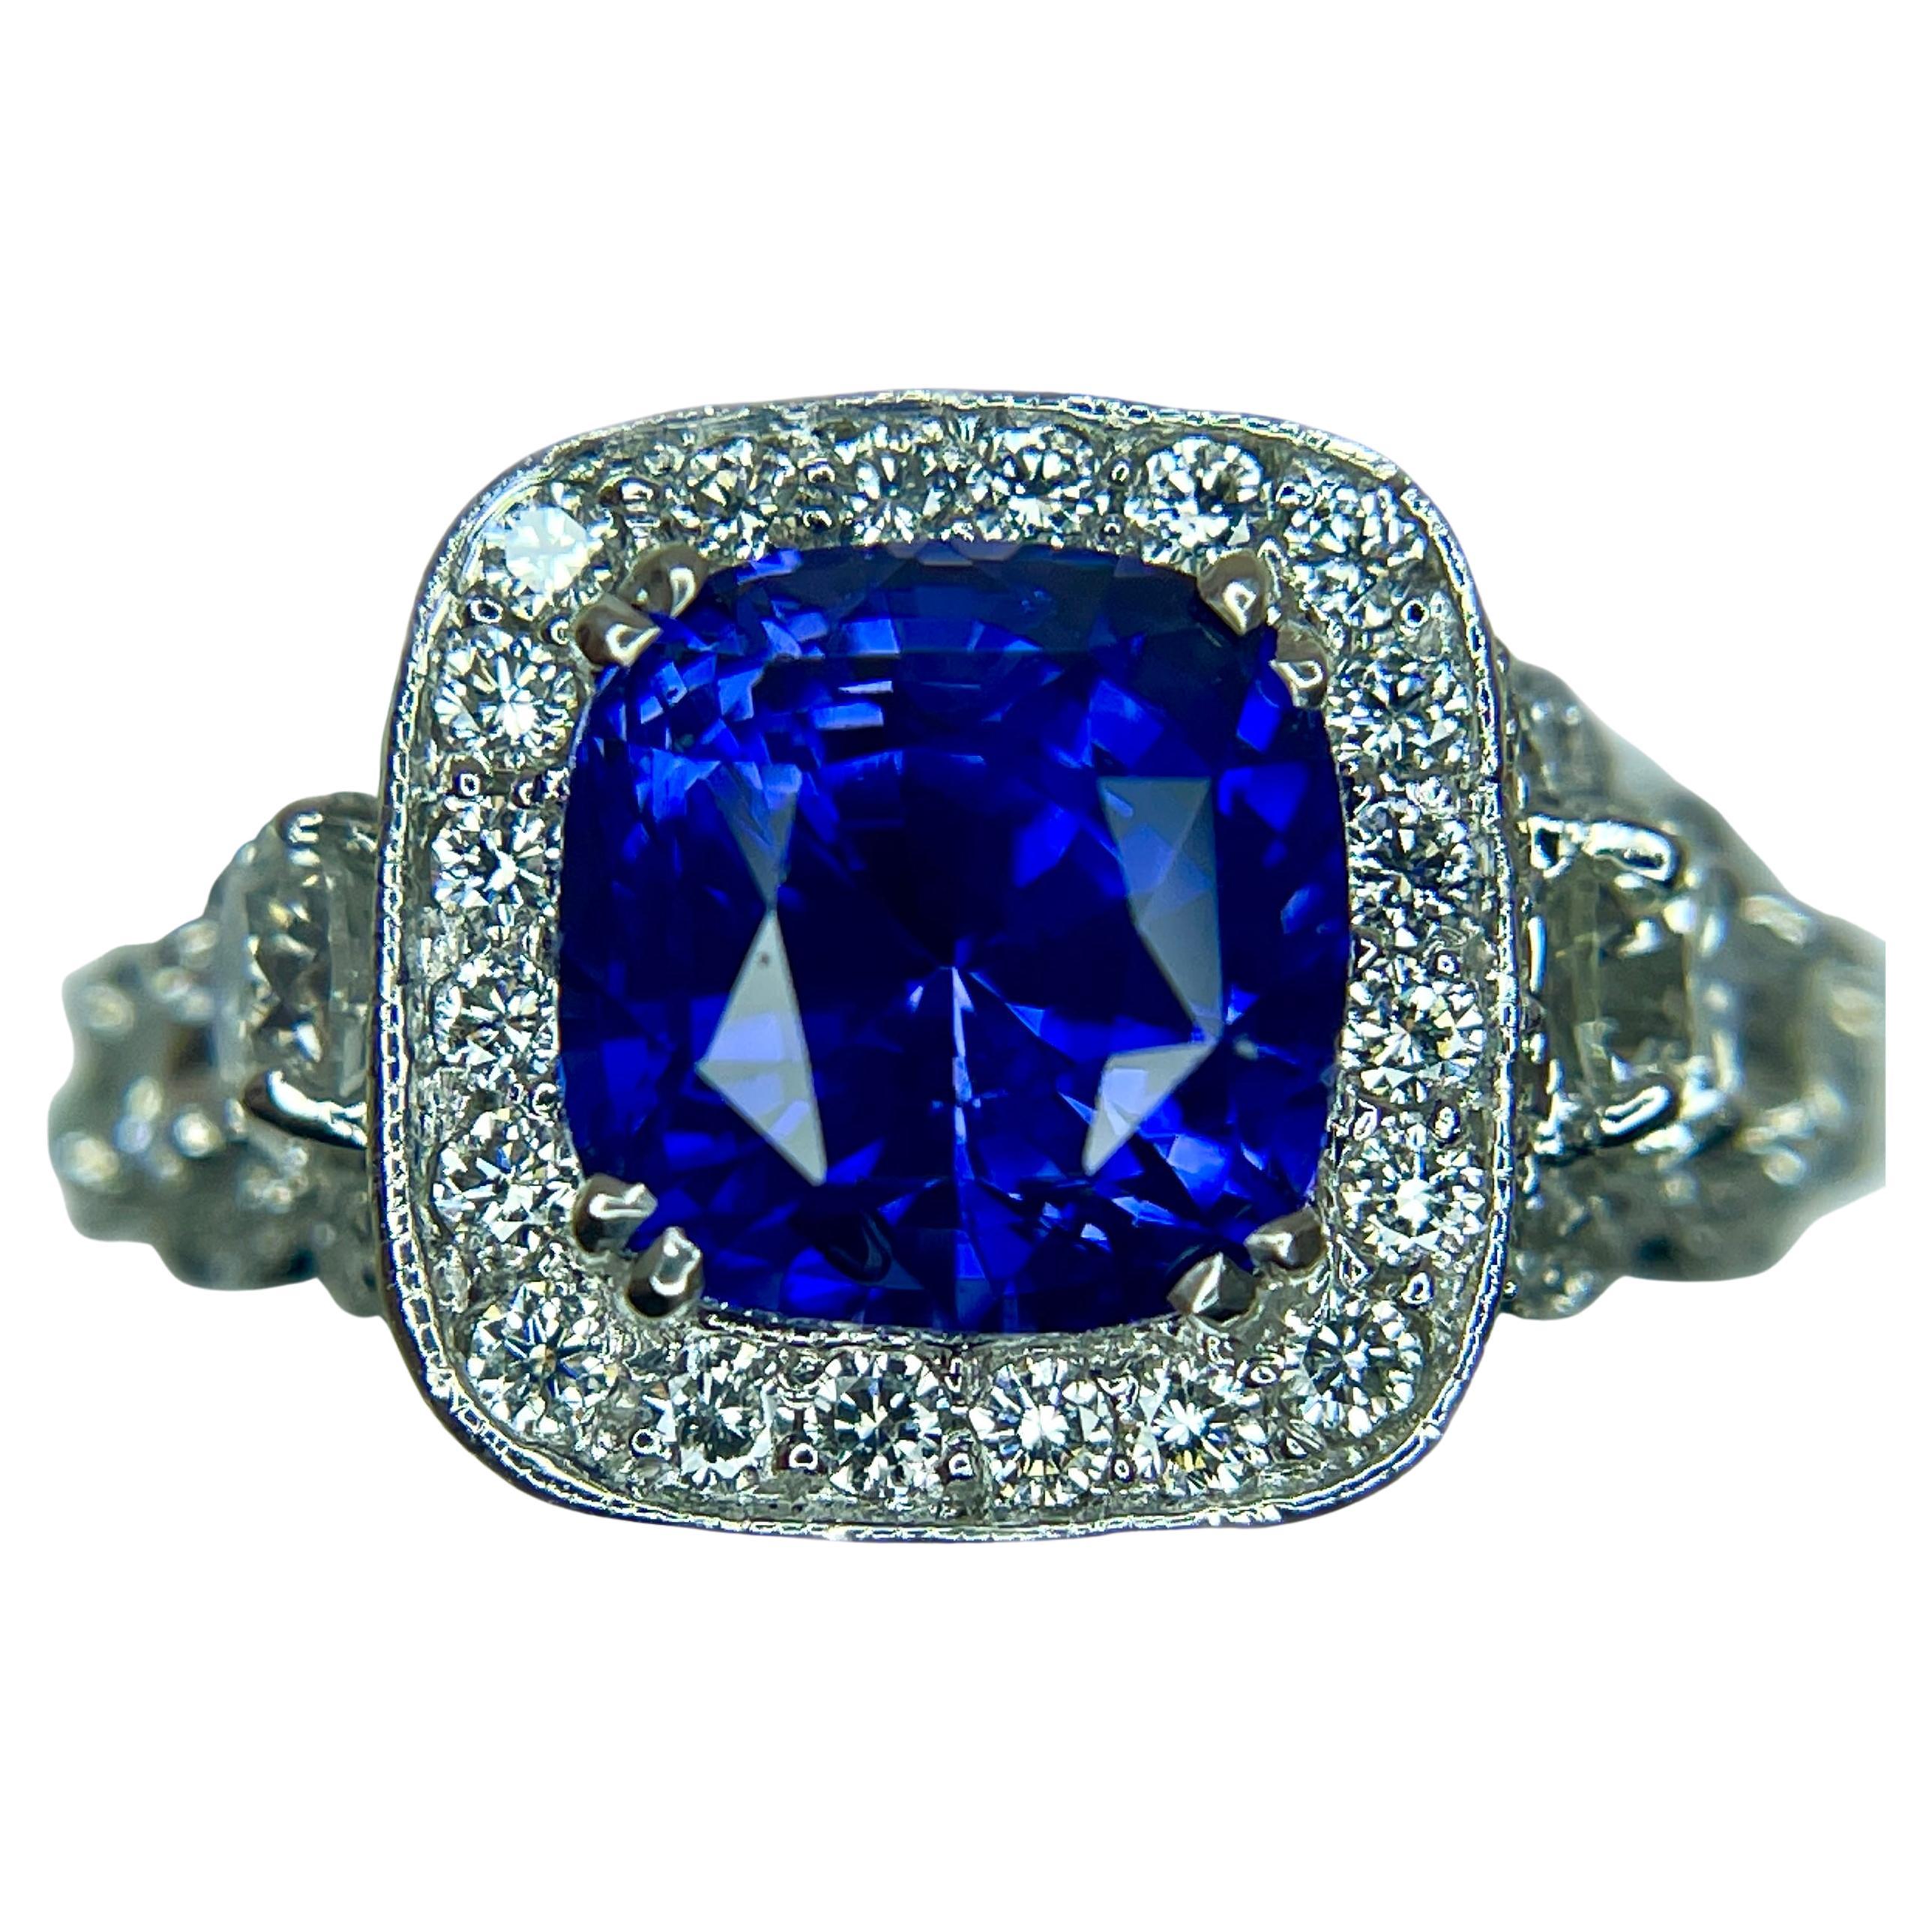 5.16 Carat Rich Blue Sapphire & Diamond 18K White Gold Ring